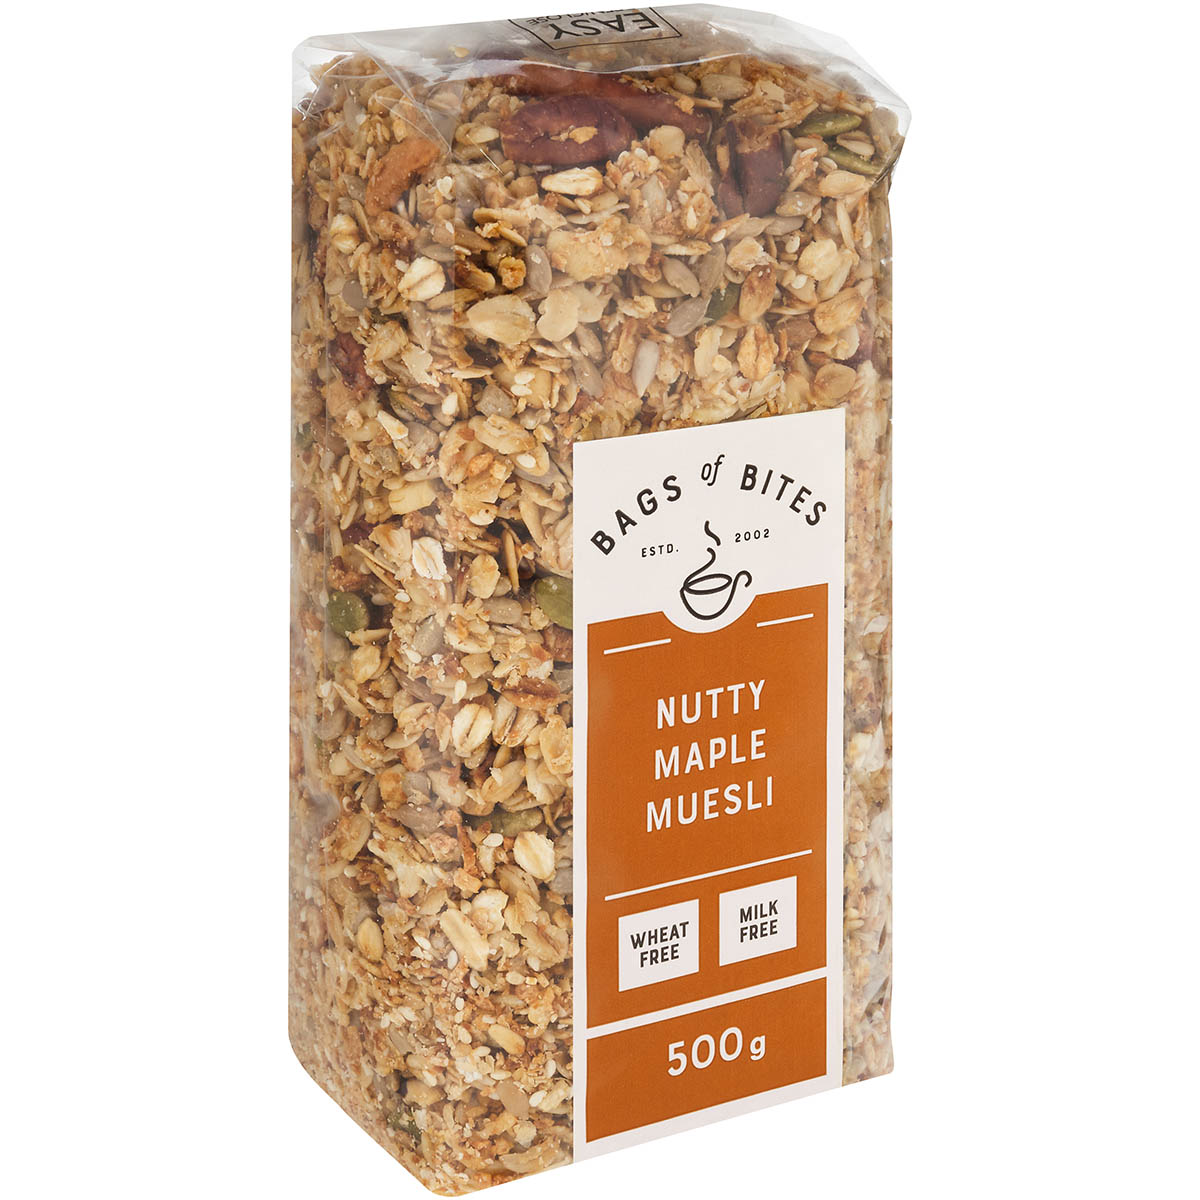 Nutty Maple Muesli - Wheat Free, Dairy Free